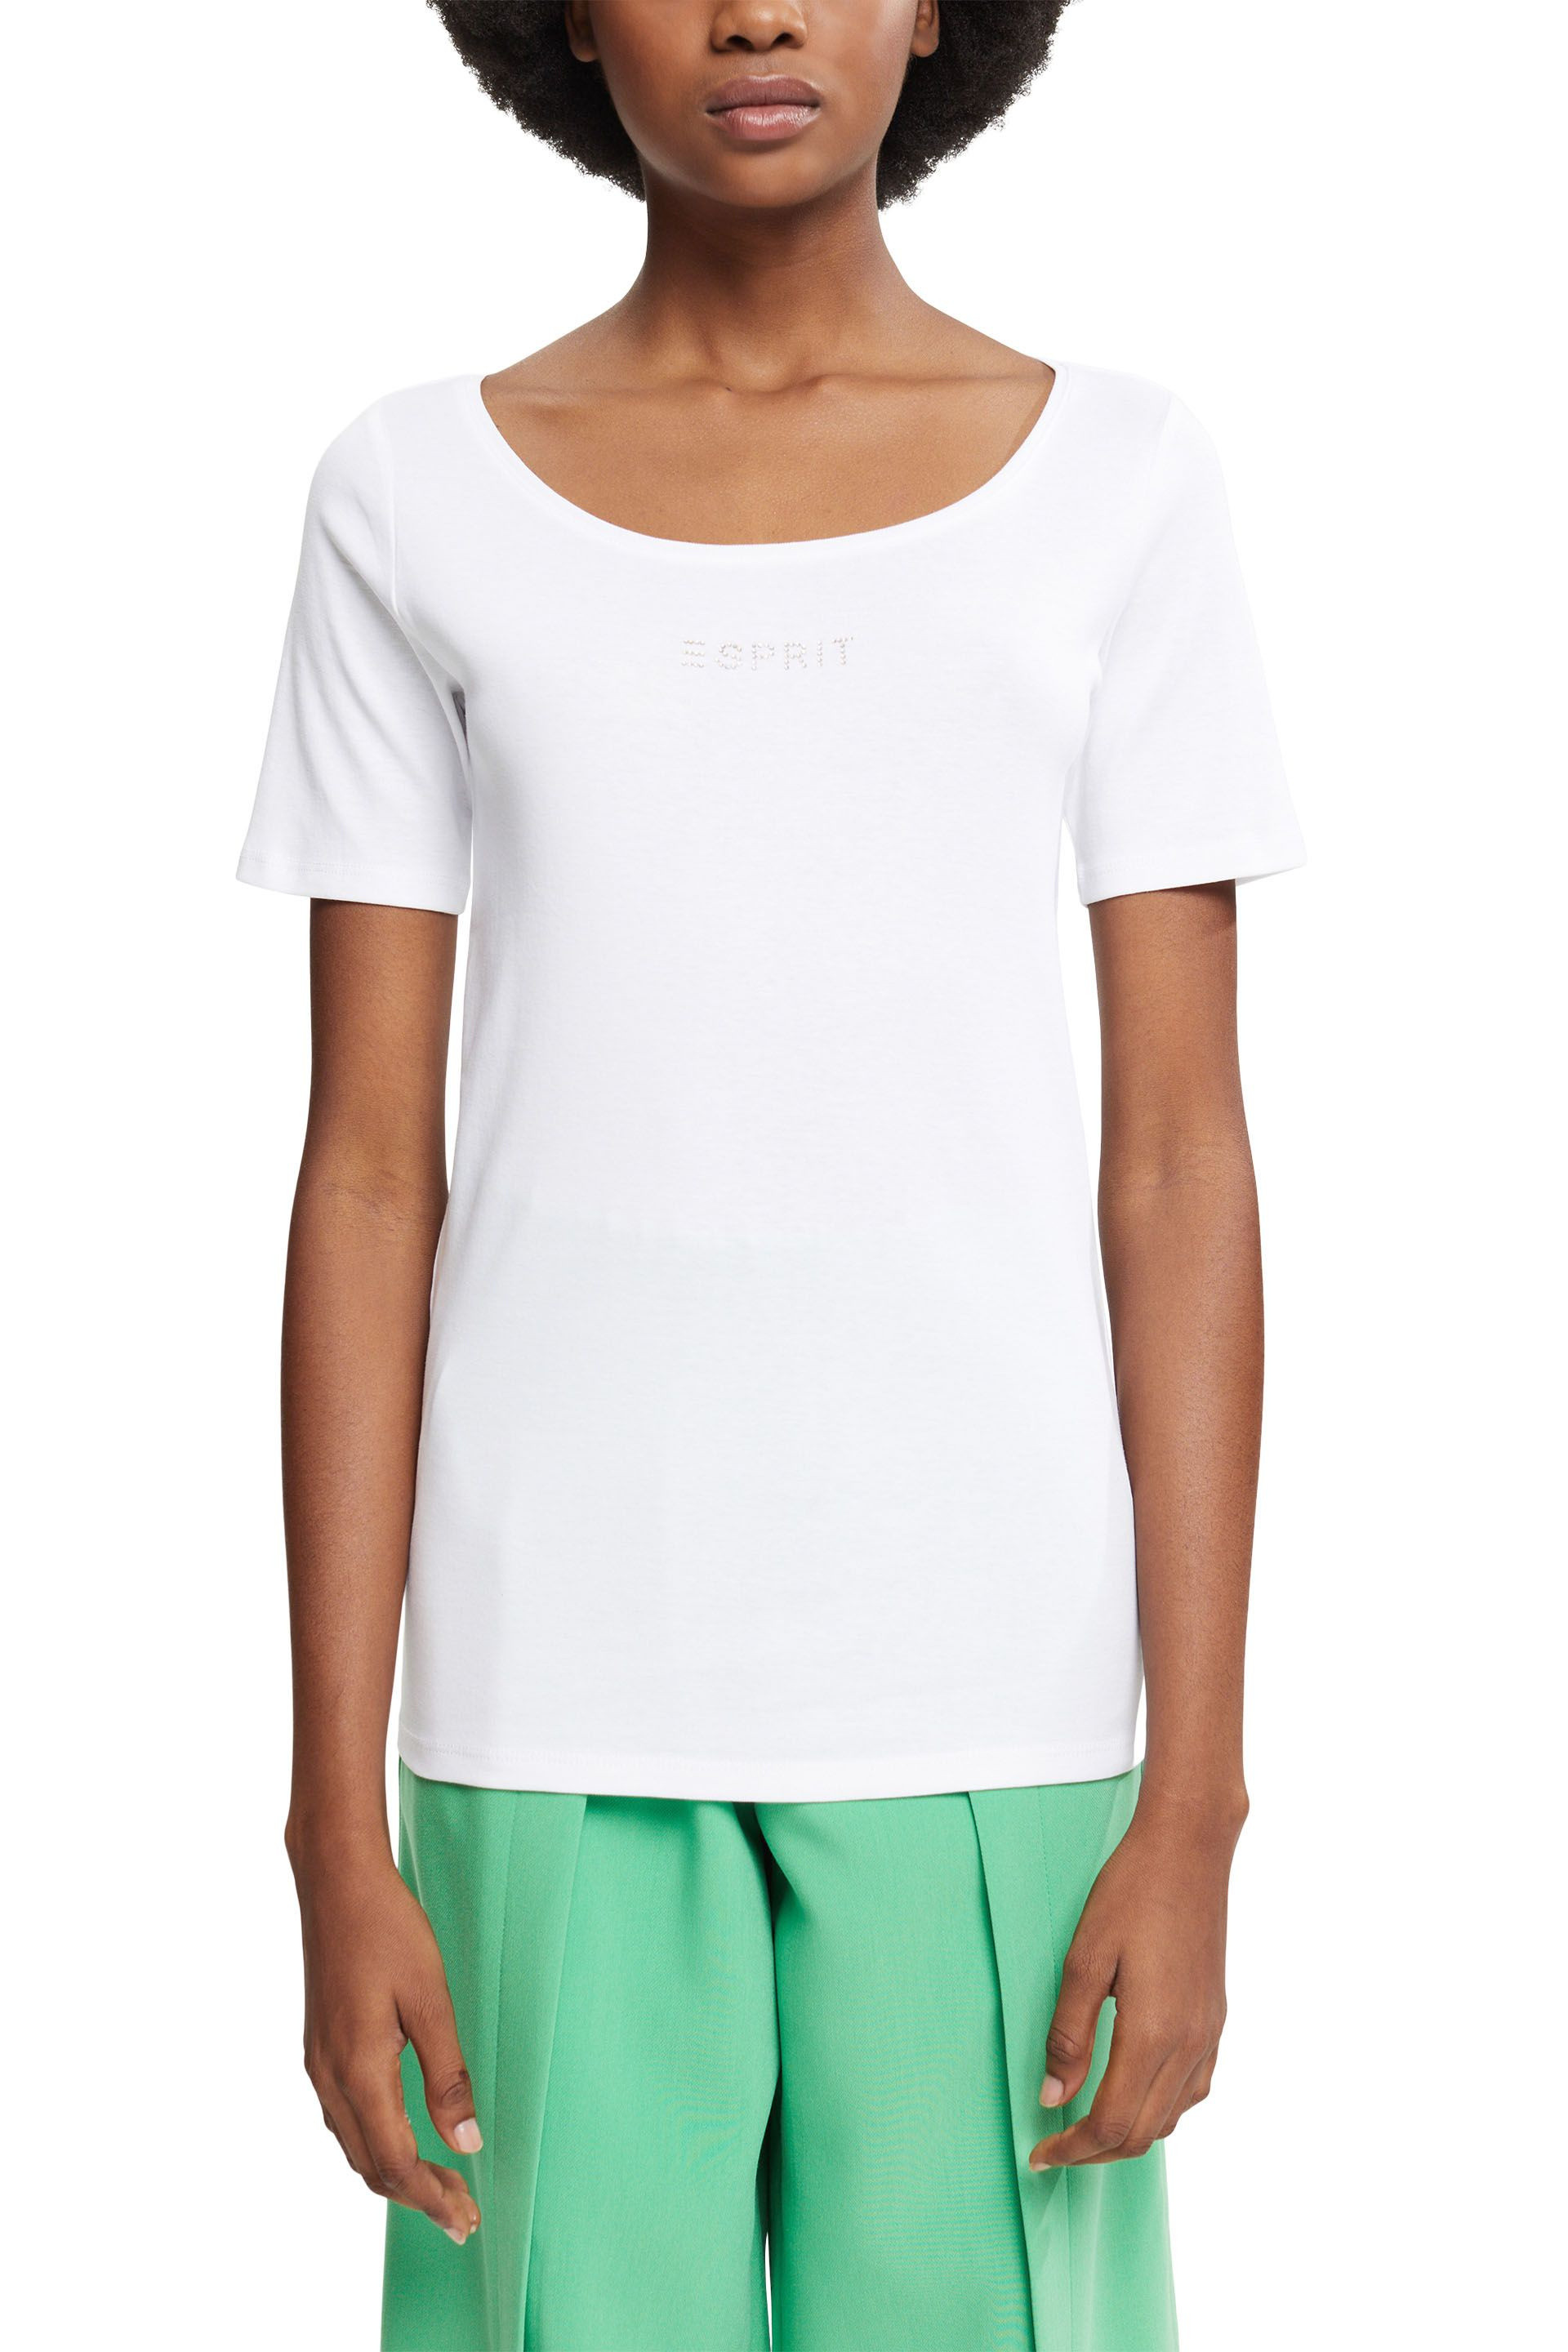 Esprit - Cotton logo T-shirt, White, large image number 1